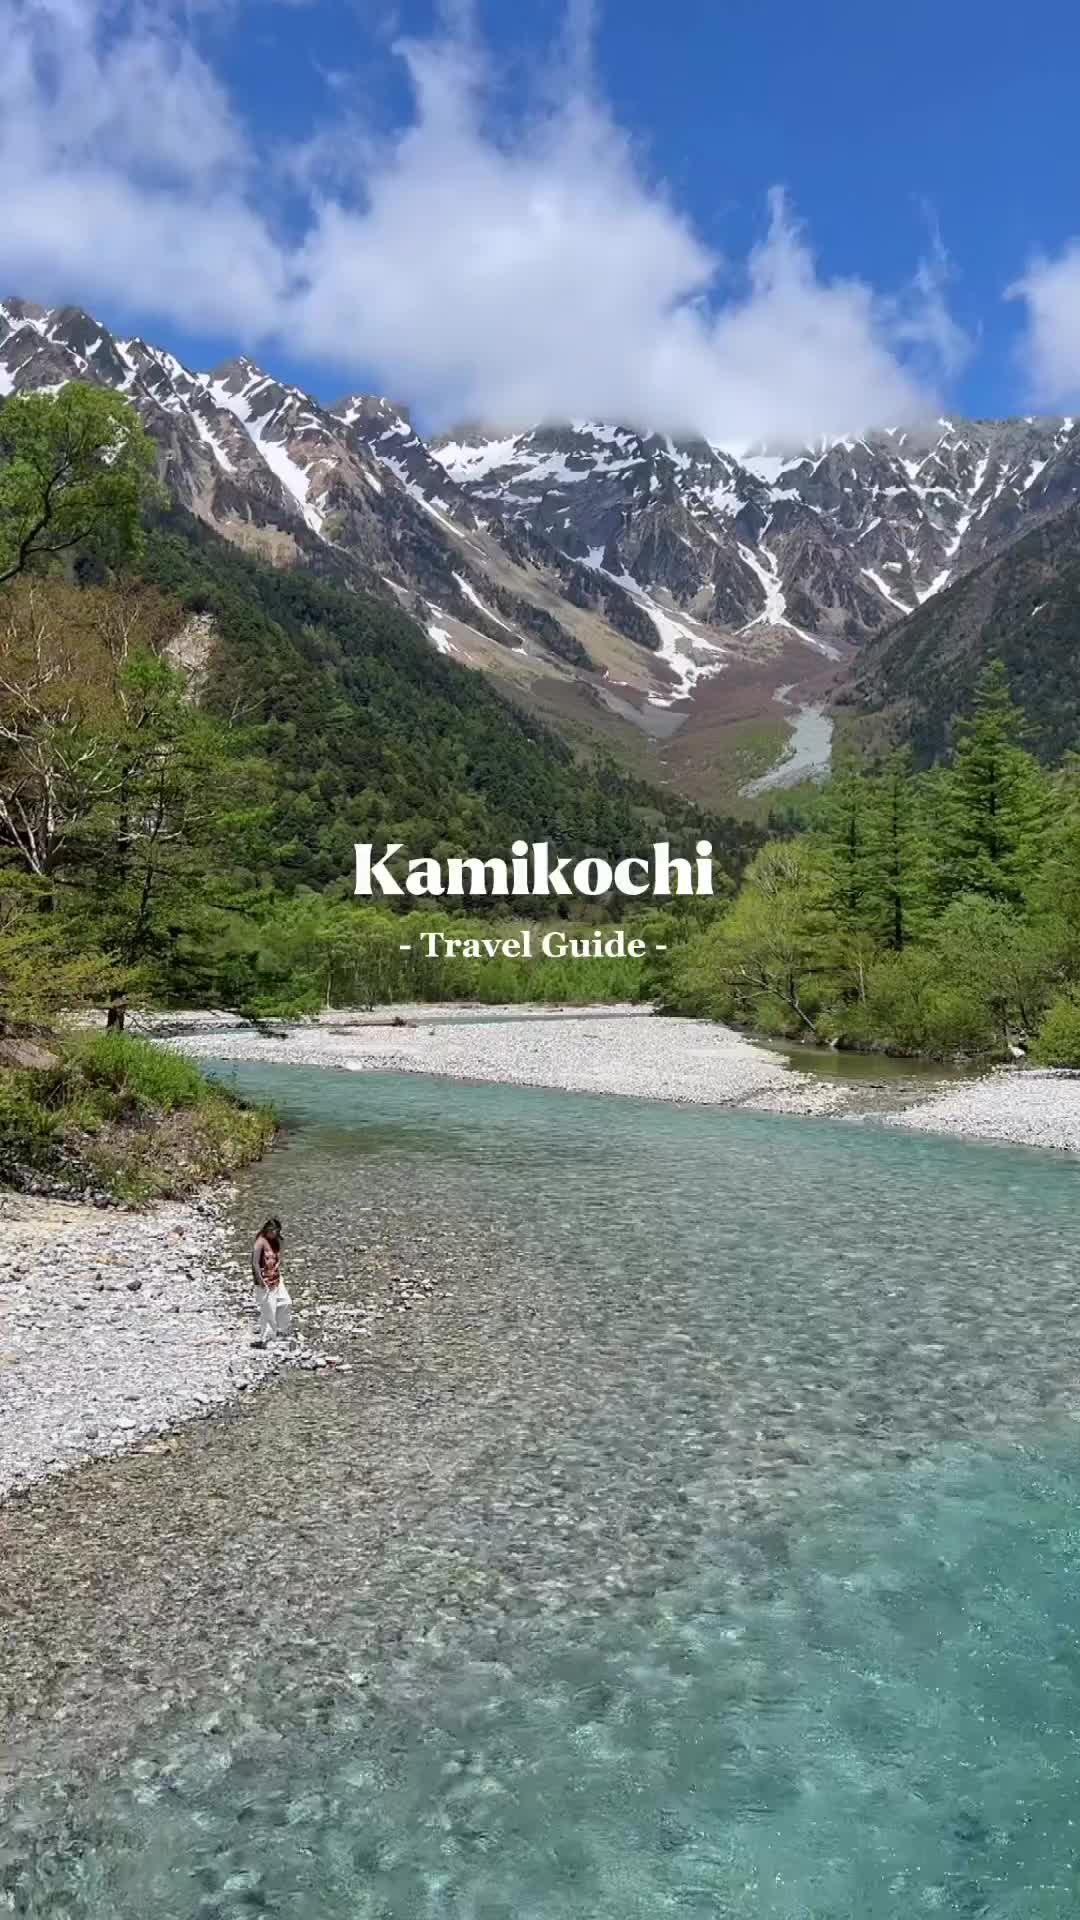 Kamikochi Travel Guide: Explore the Japanese Alps